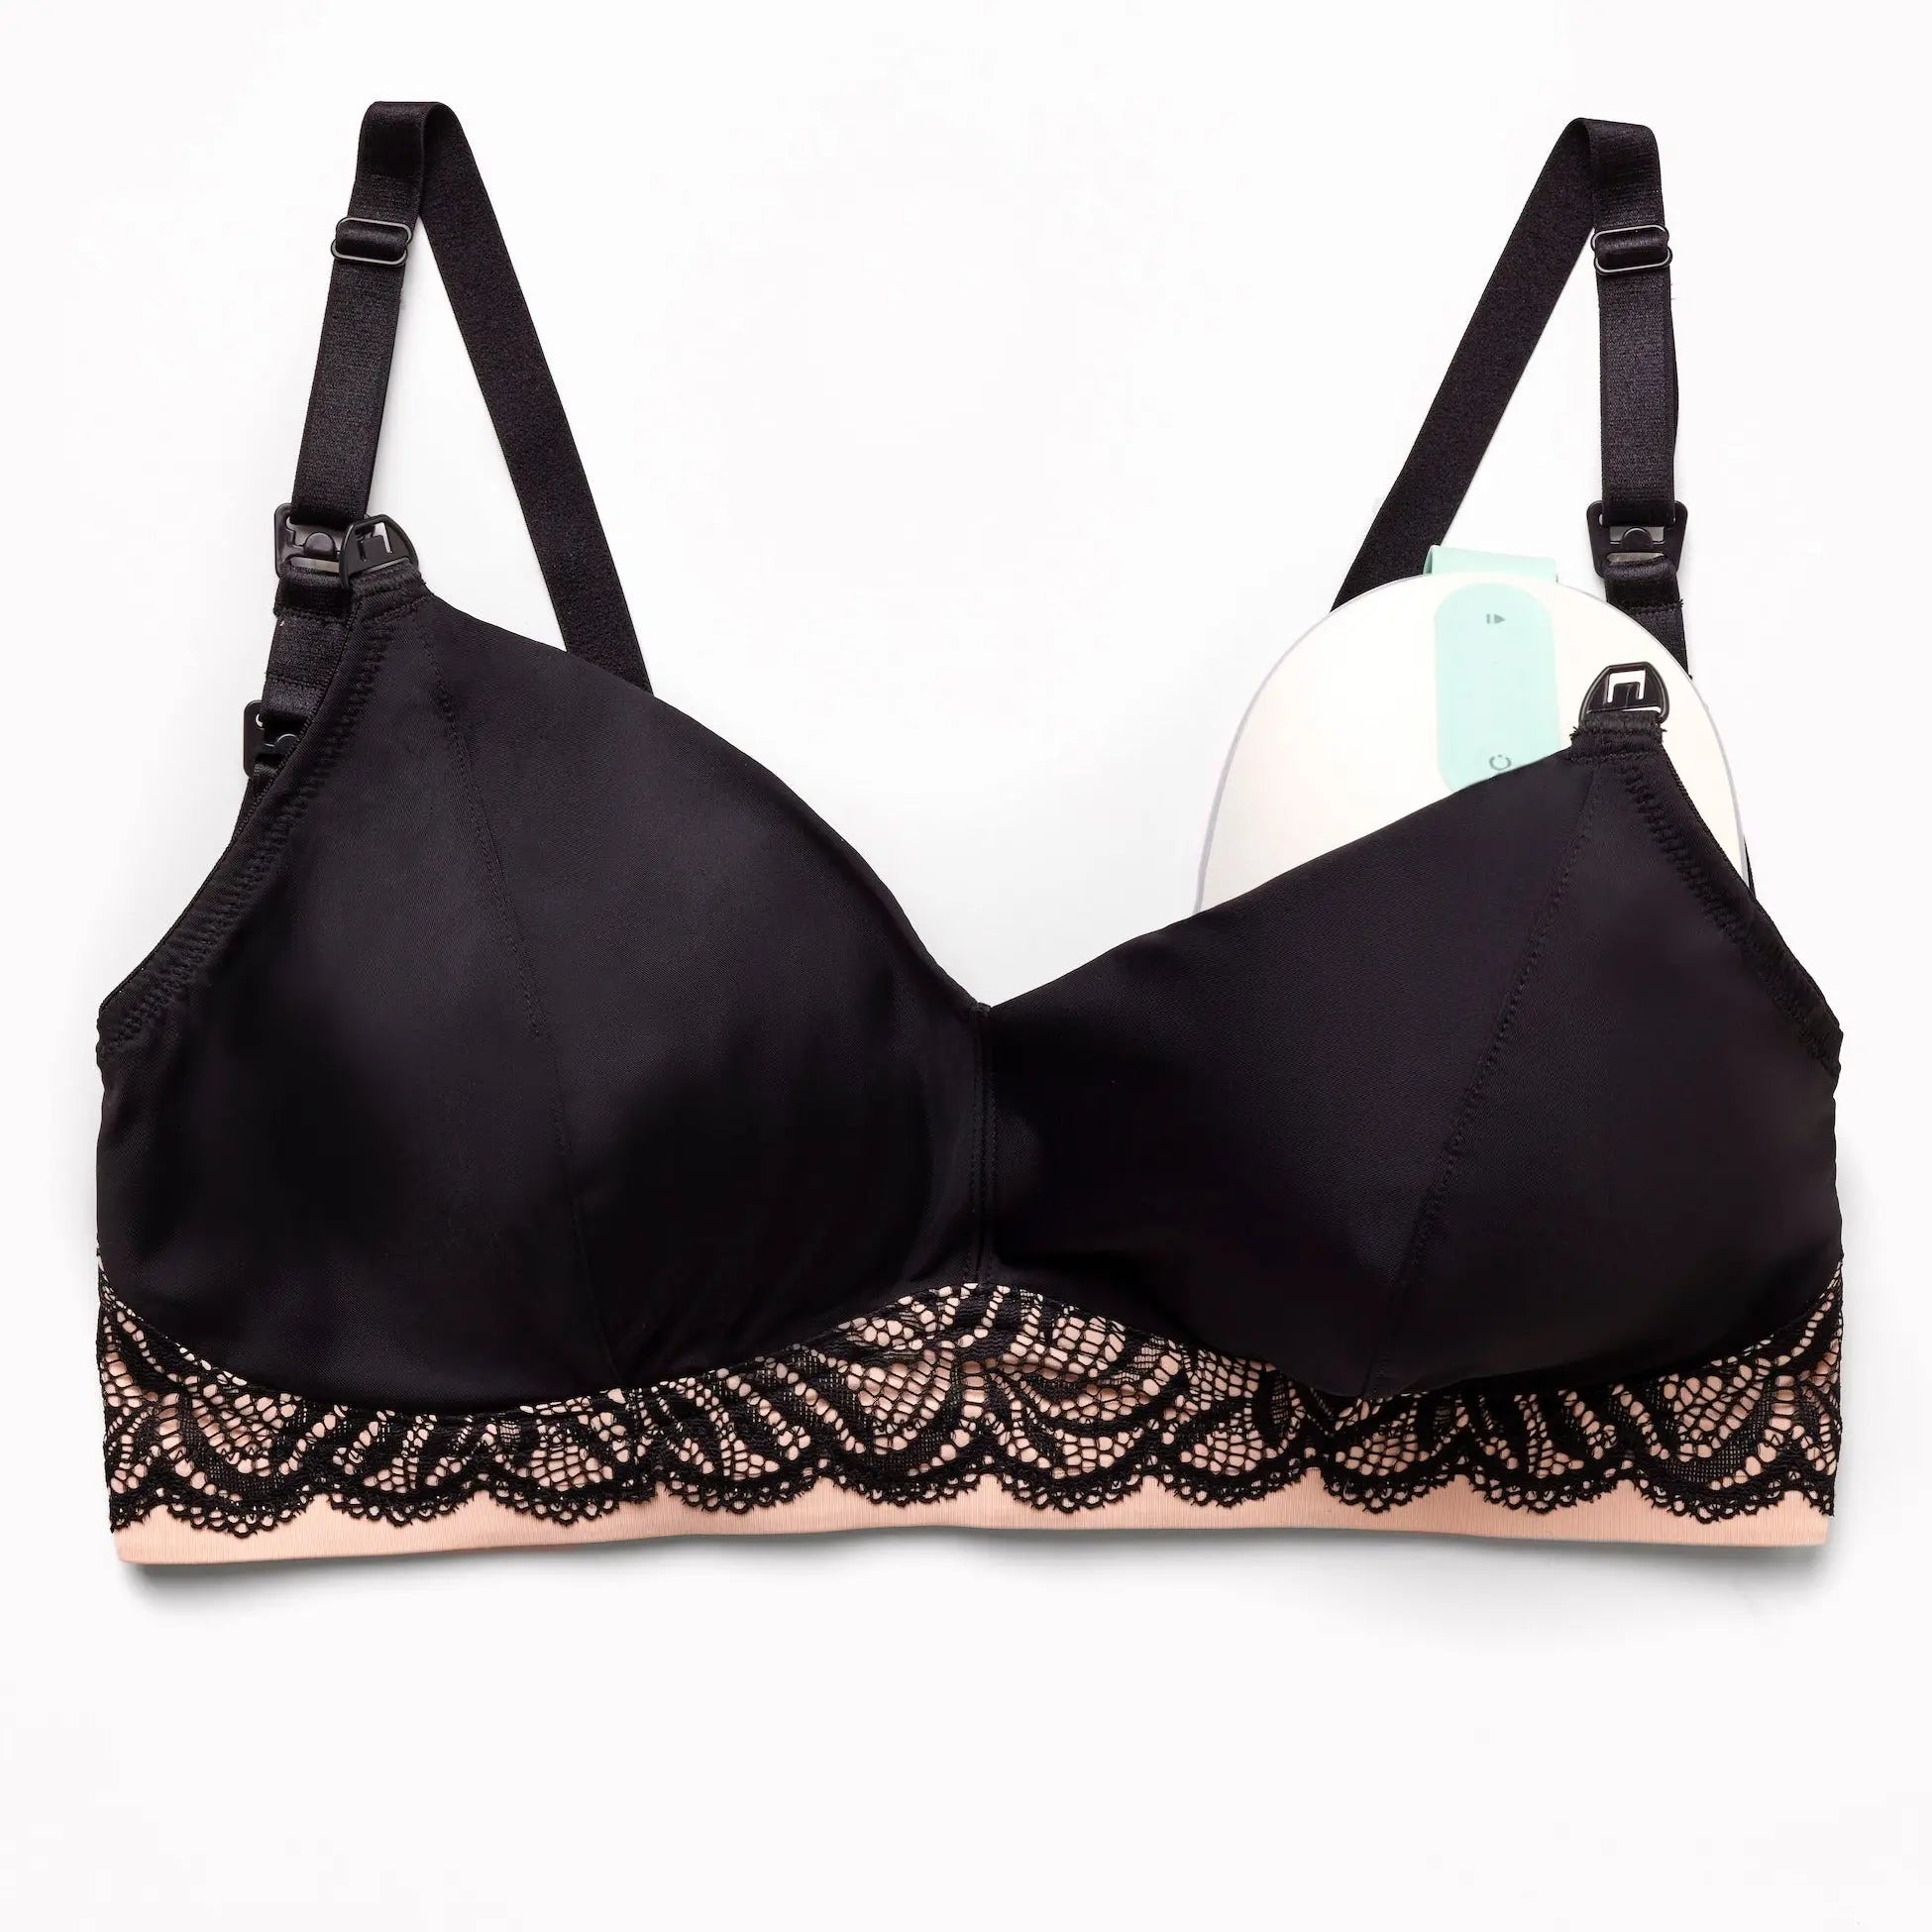 Luxe pumping bra black flatlay image